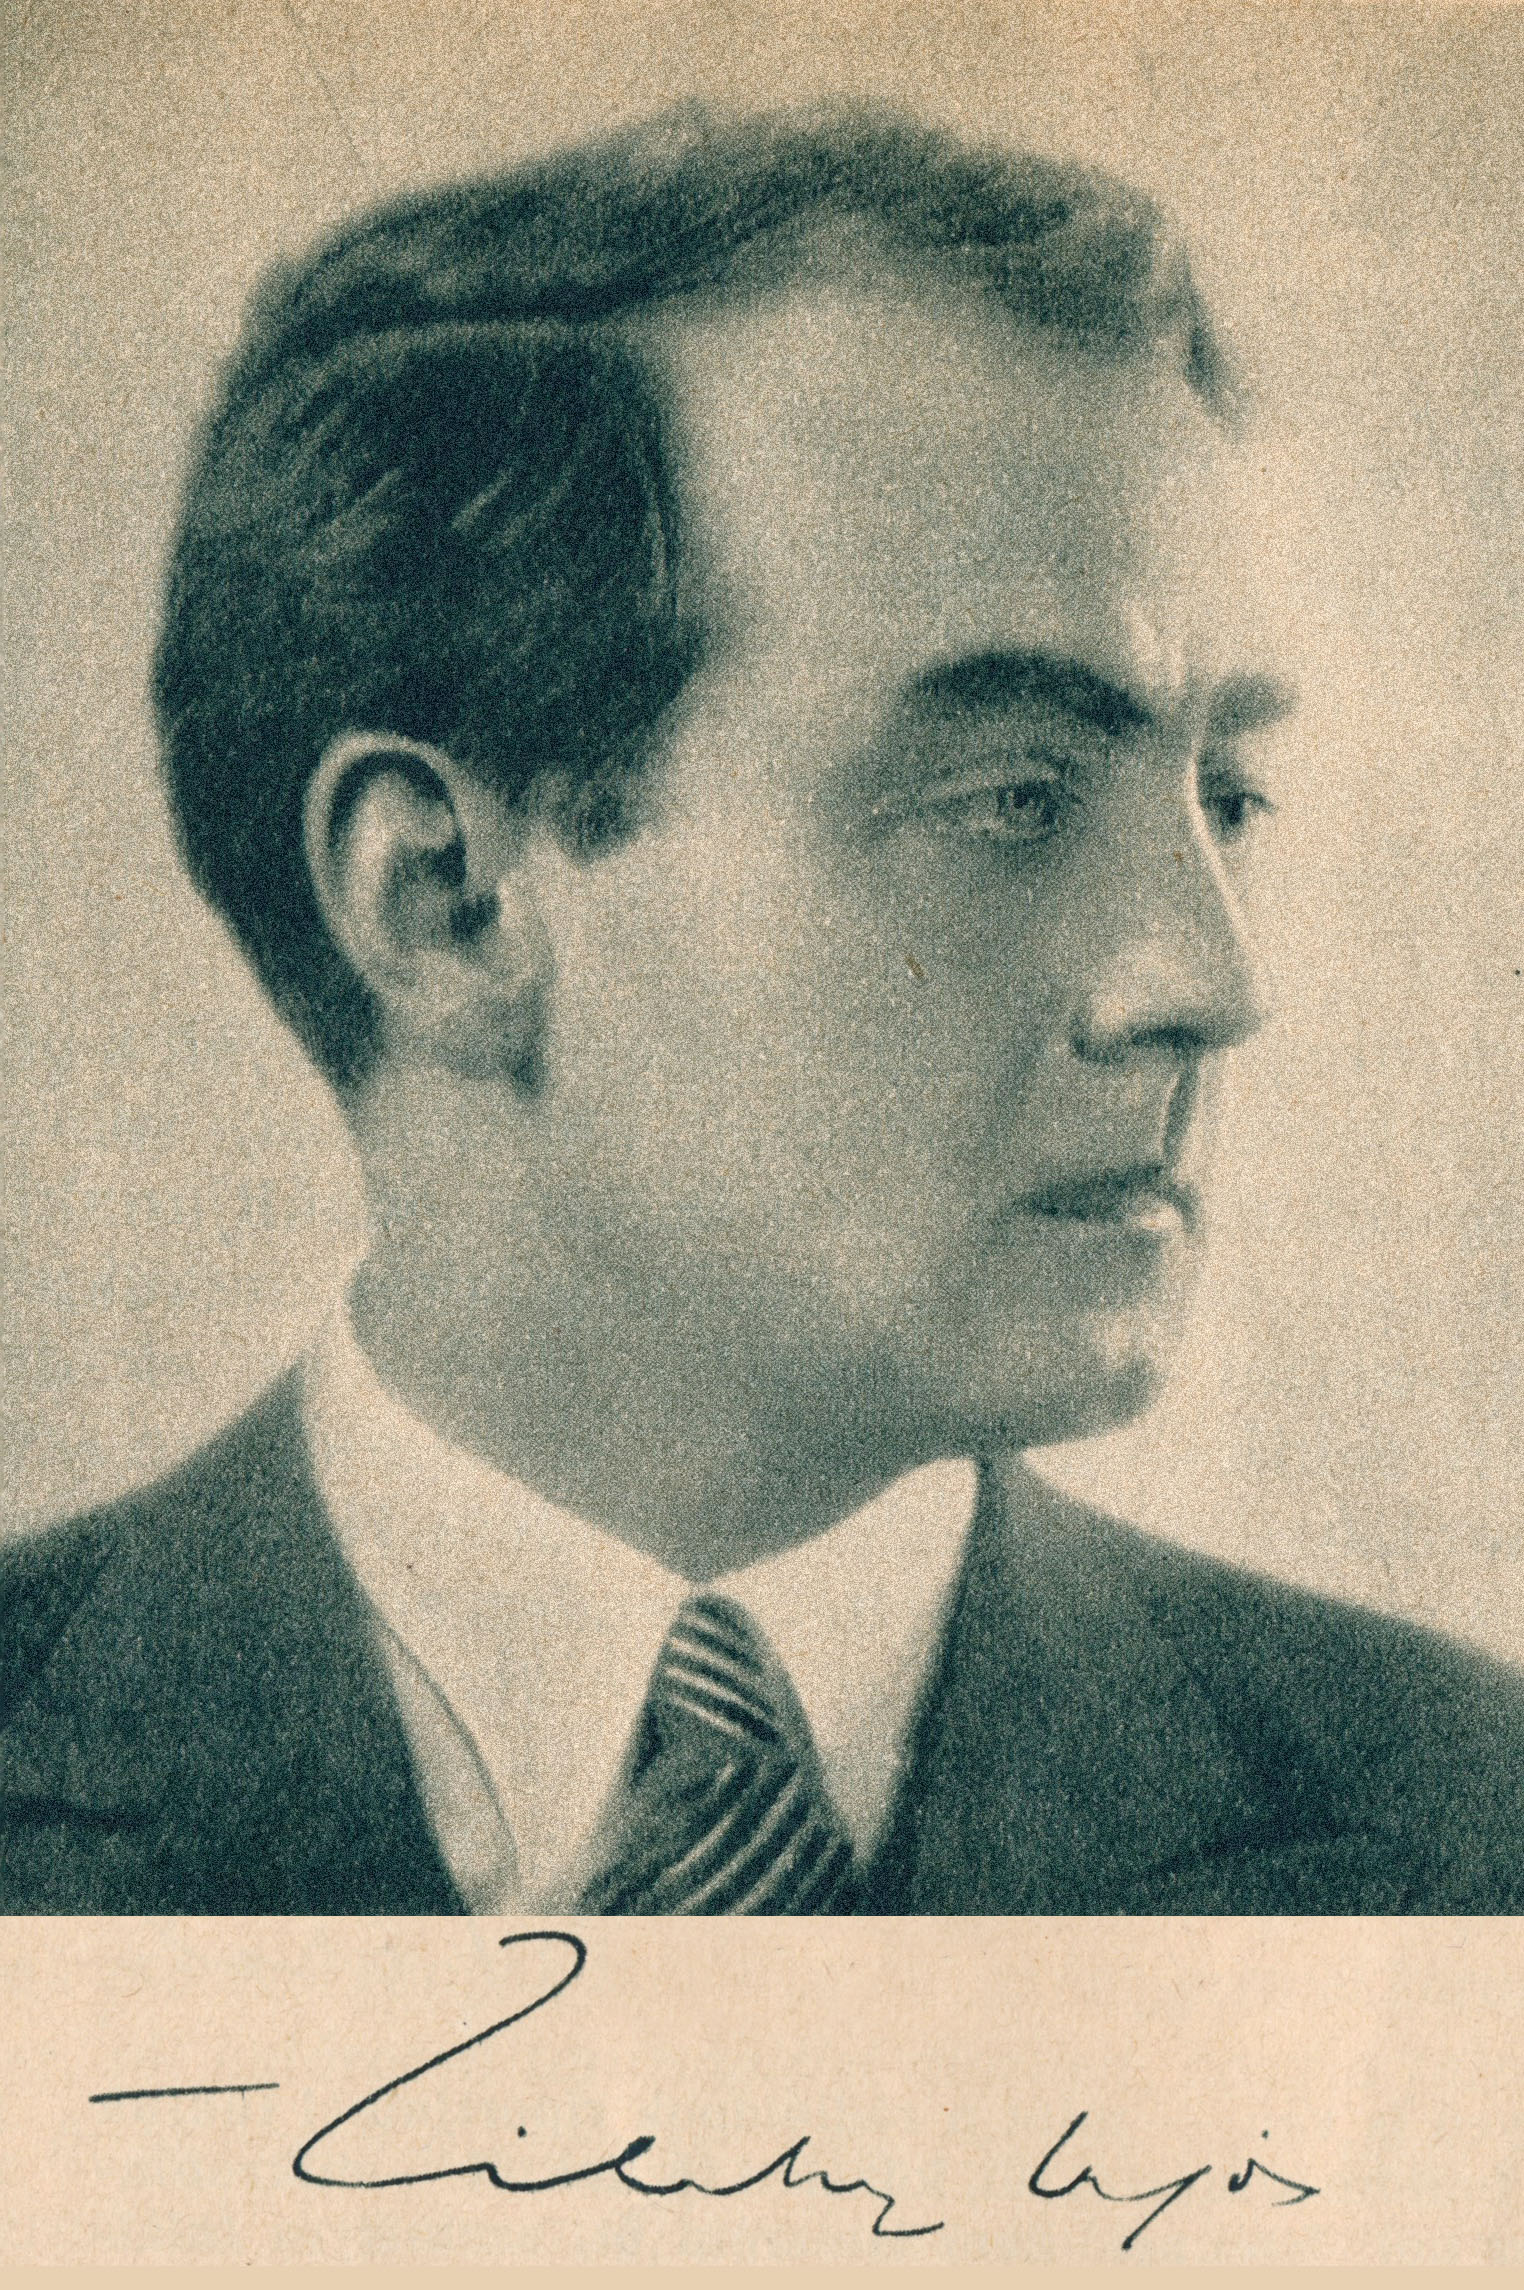 Zilahy in 1935